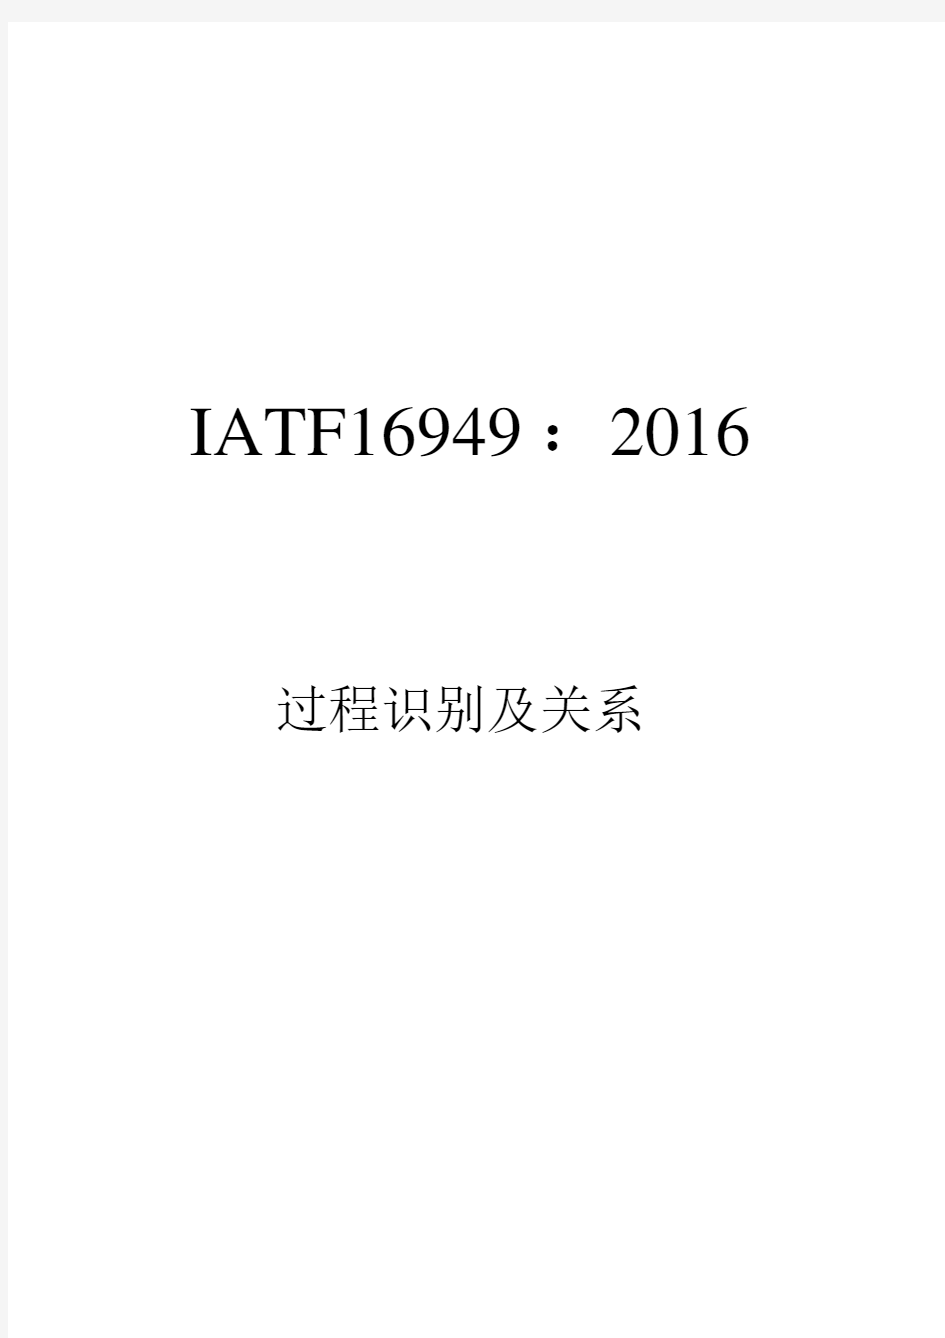 IATF16949-2016过程识别及关系说明-矩阵图